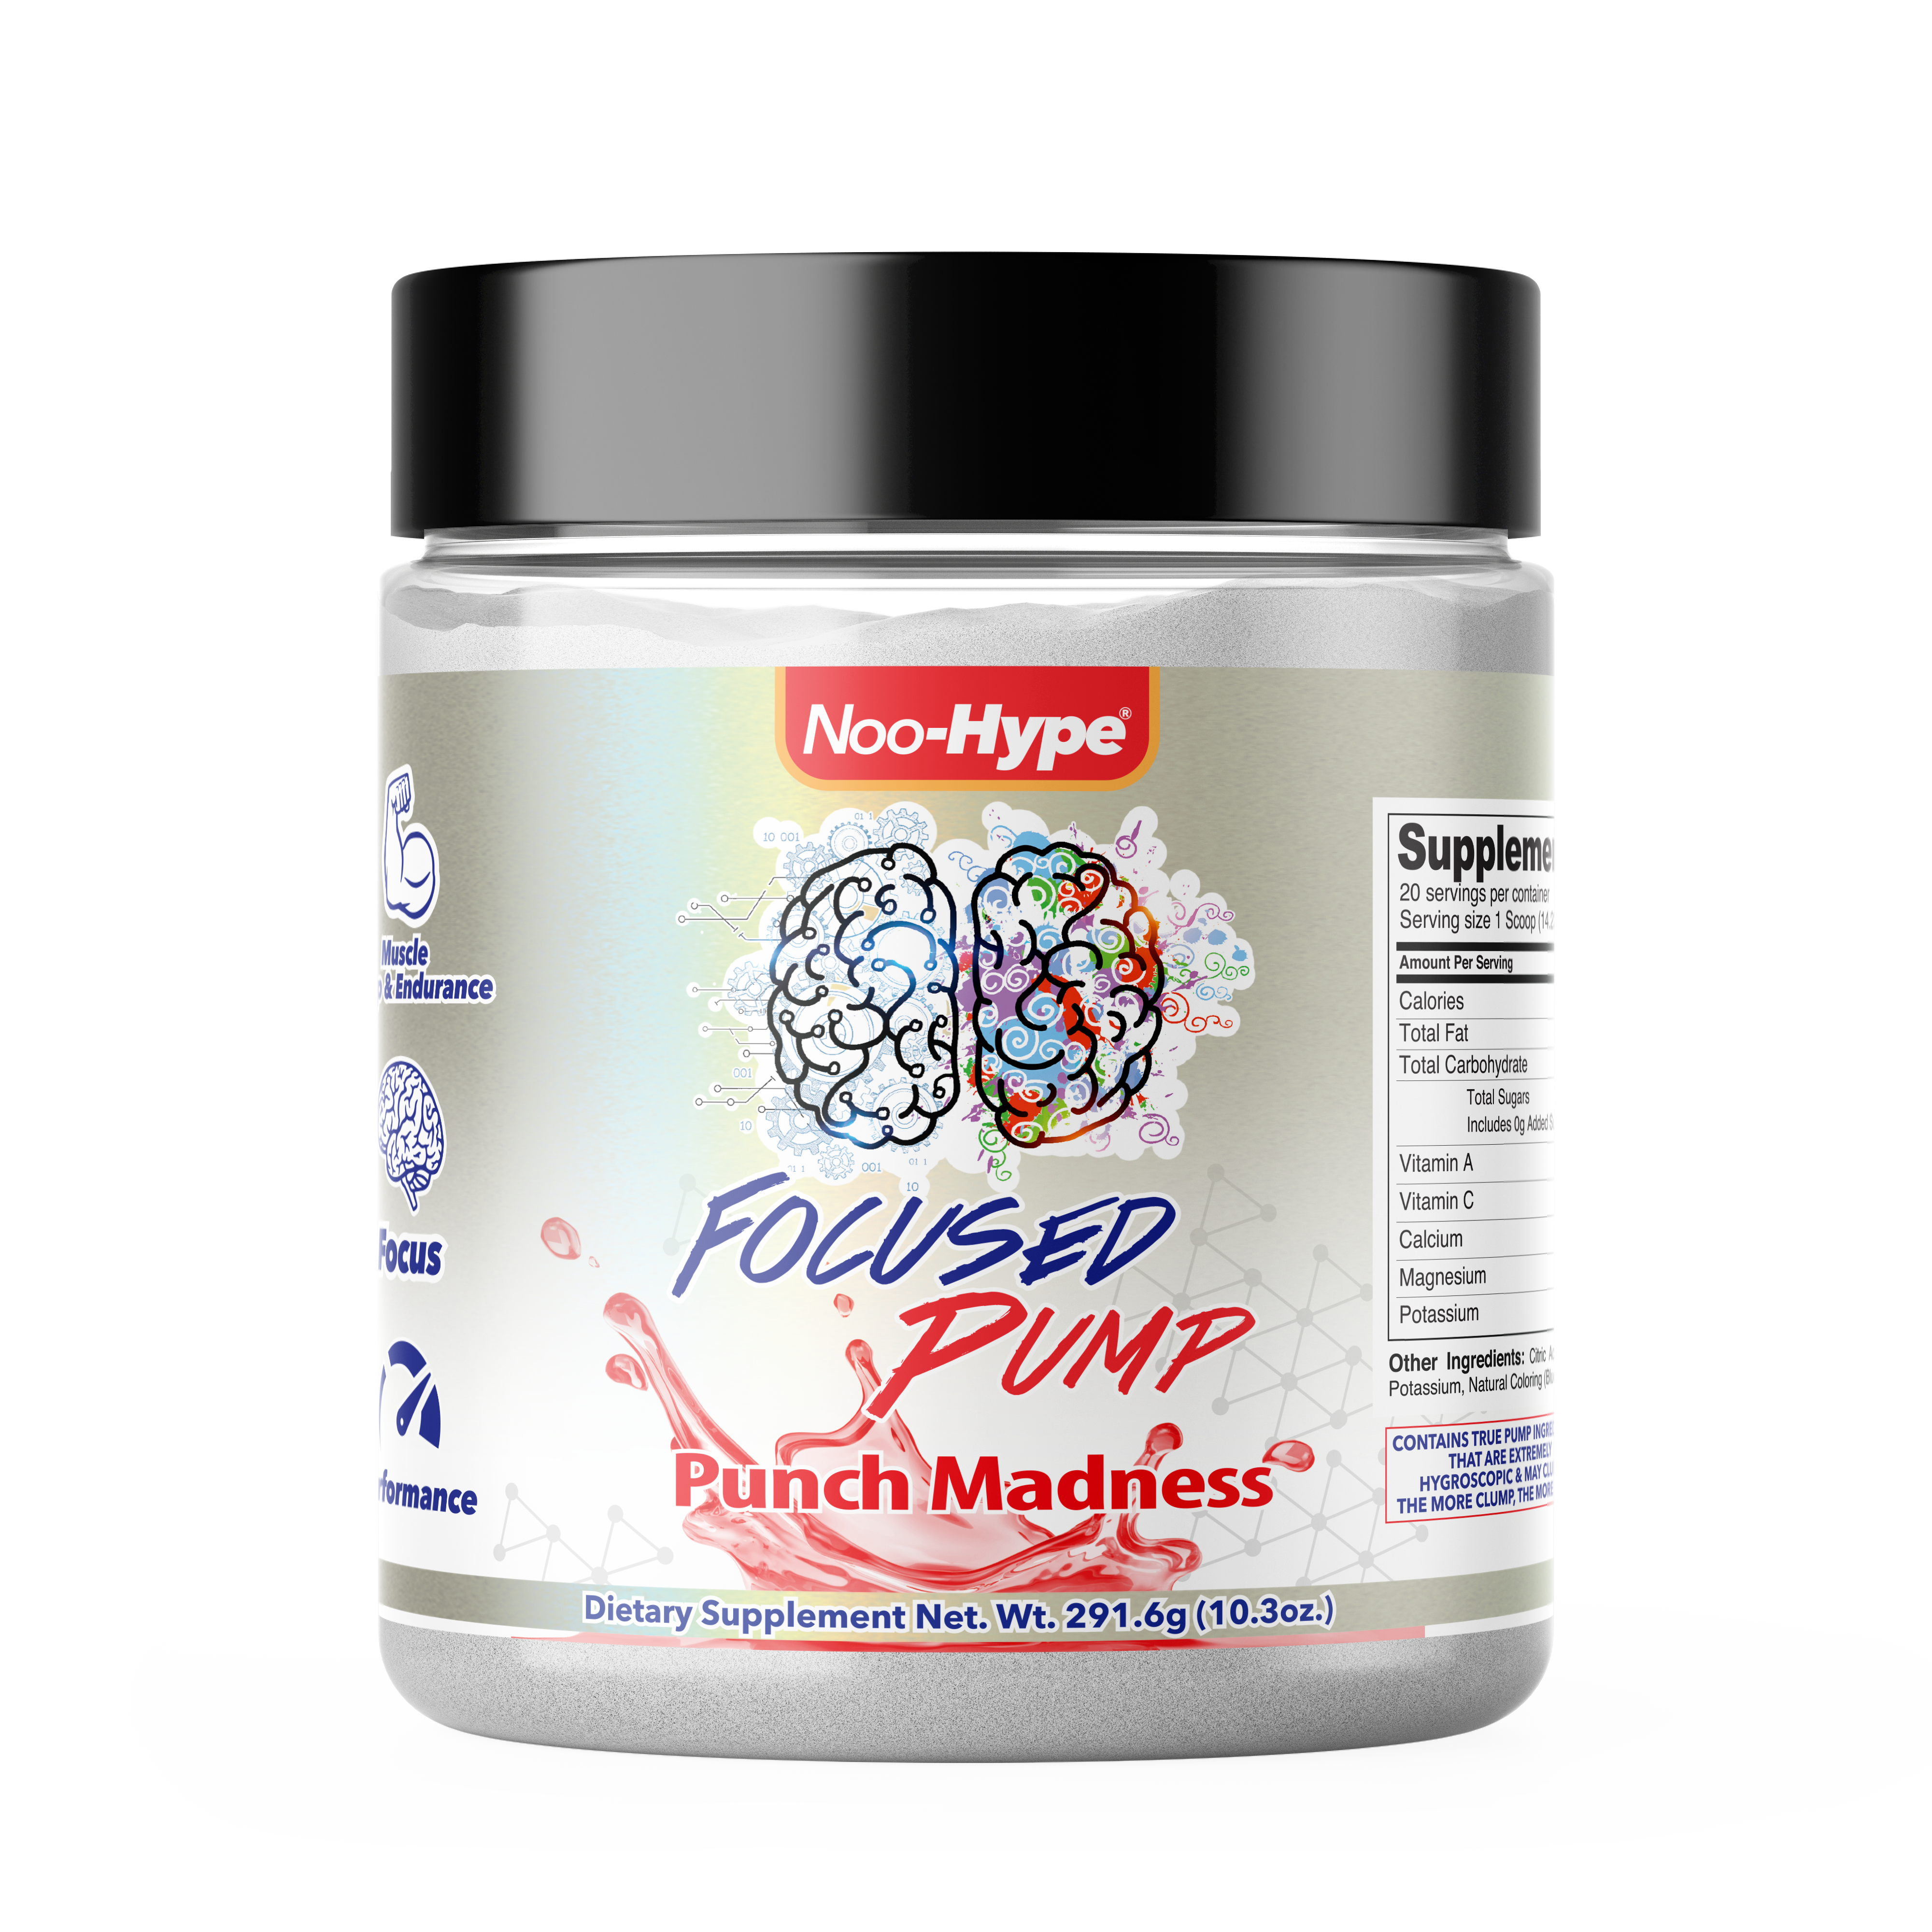 Noo-HYPE Focused Pump, 20 serving Punch Madness flavor, Non Stimulant nootropic pre workout powder